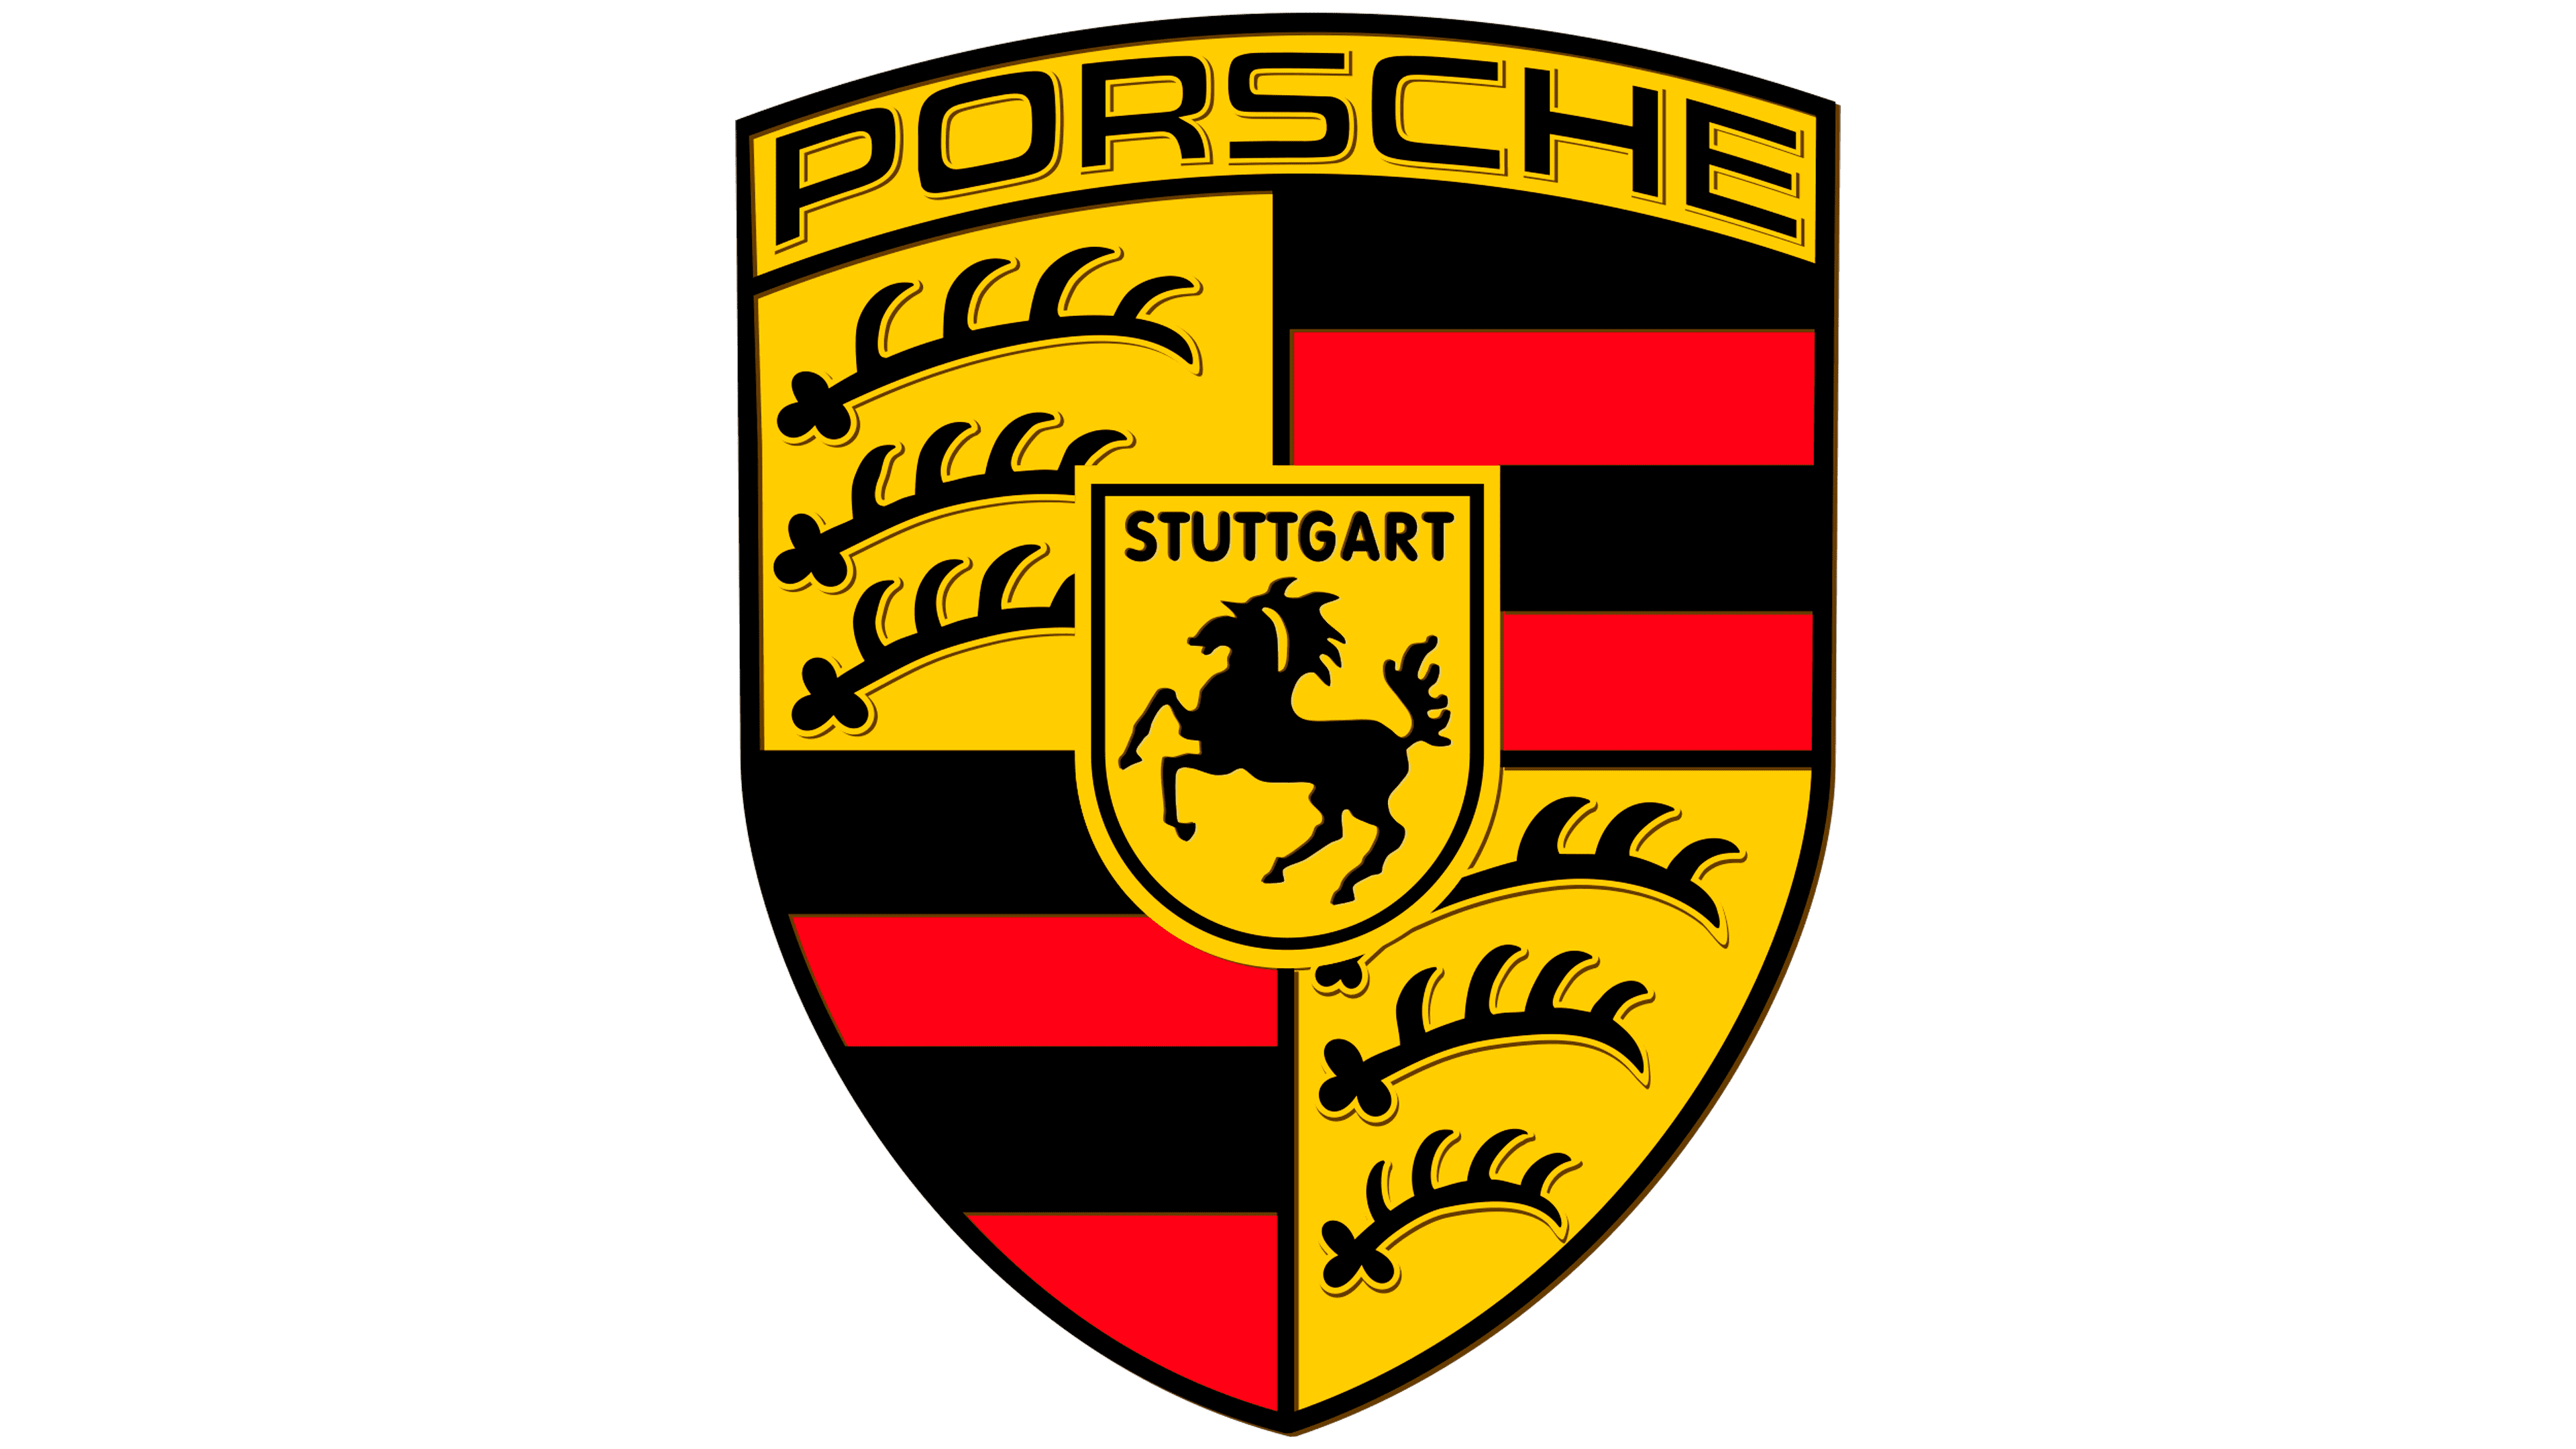 Download Porsche Logo Free Images - Www